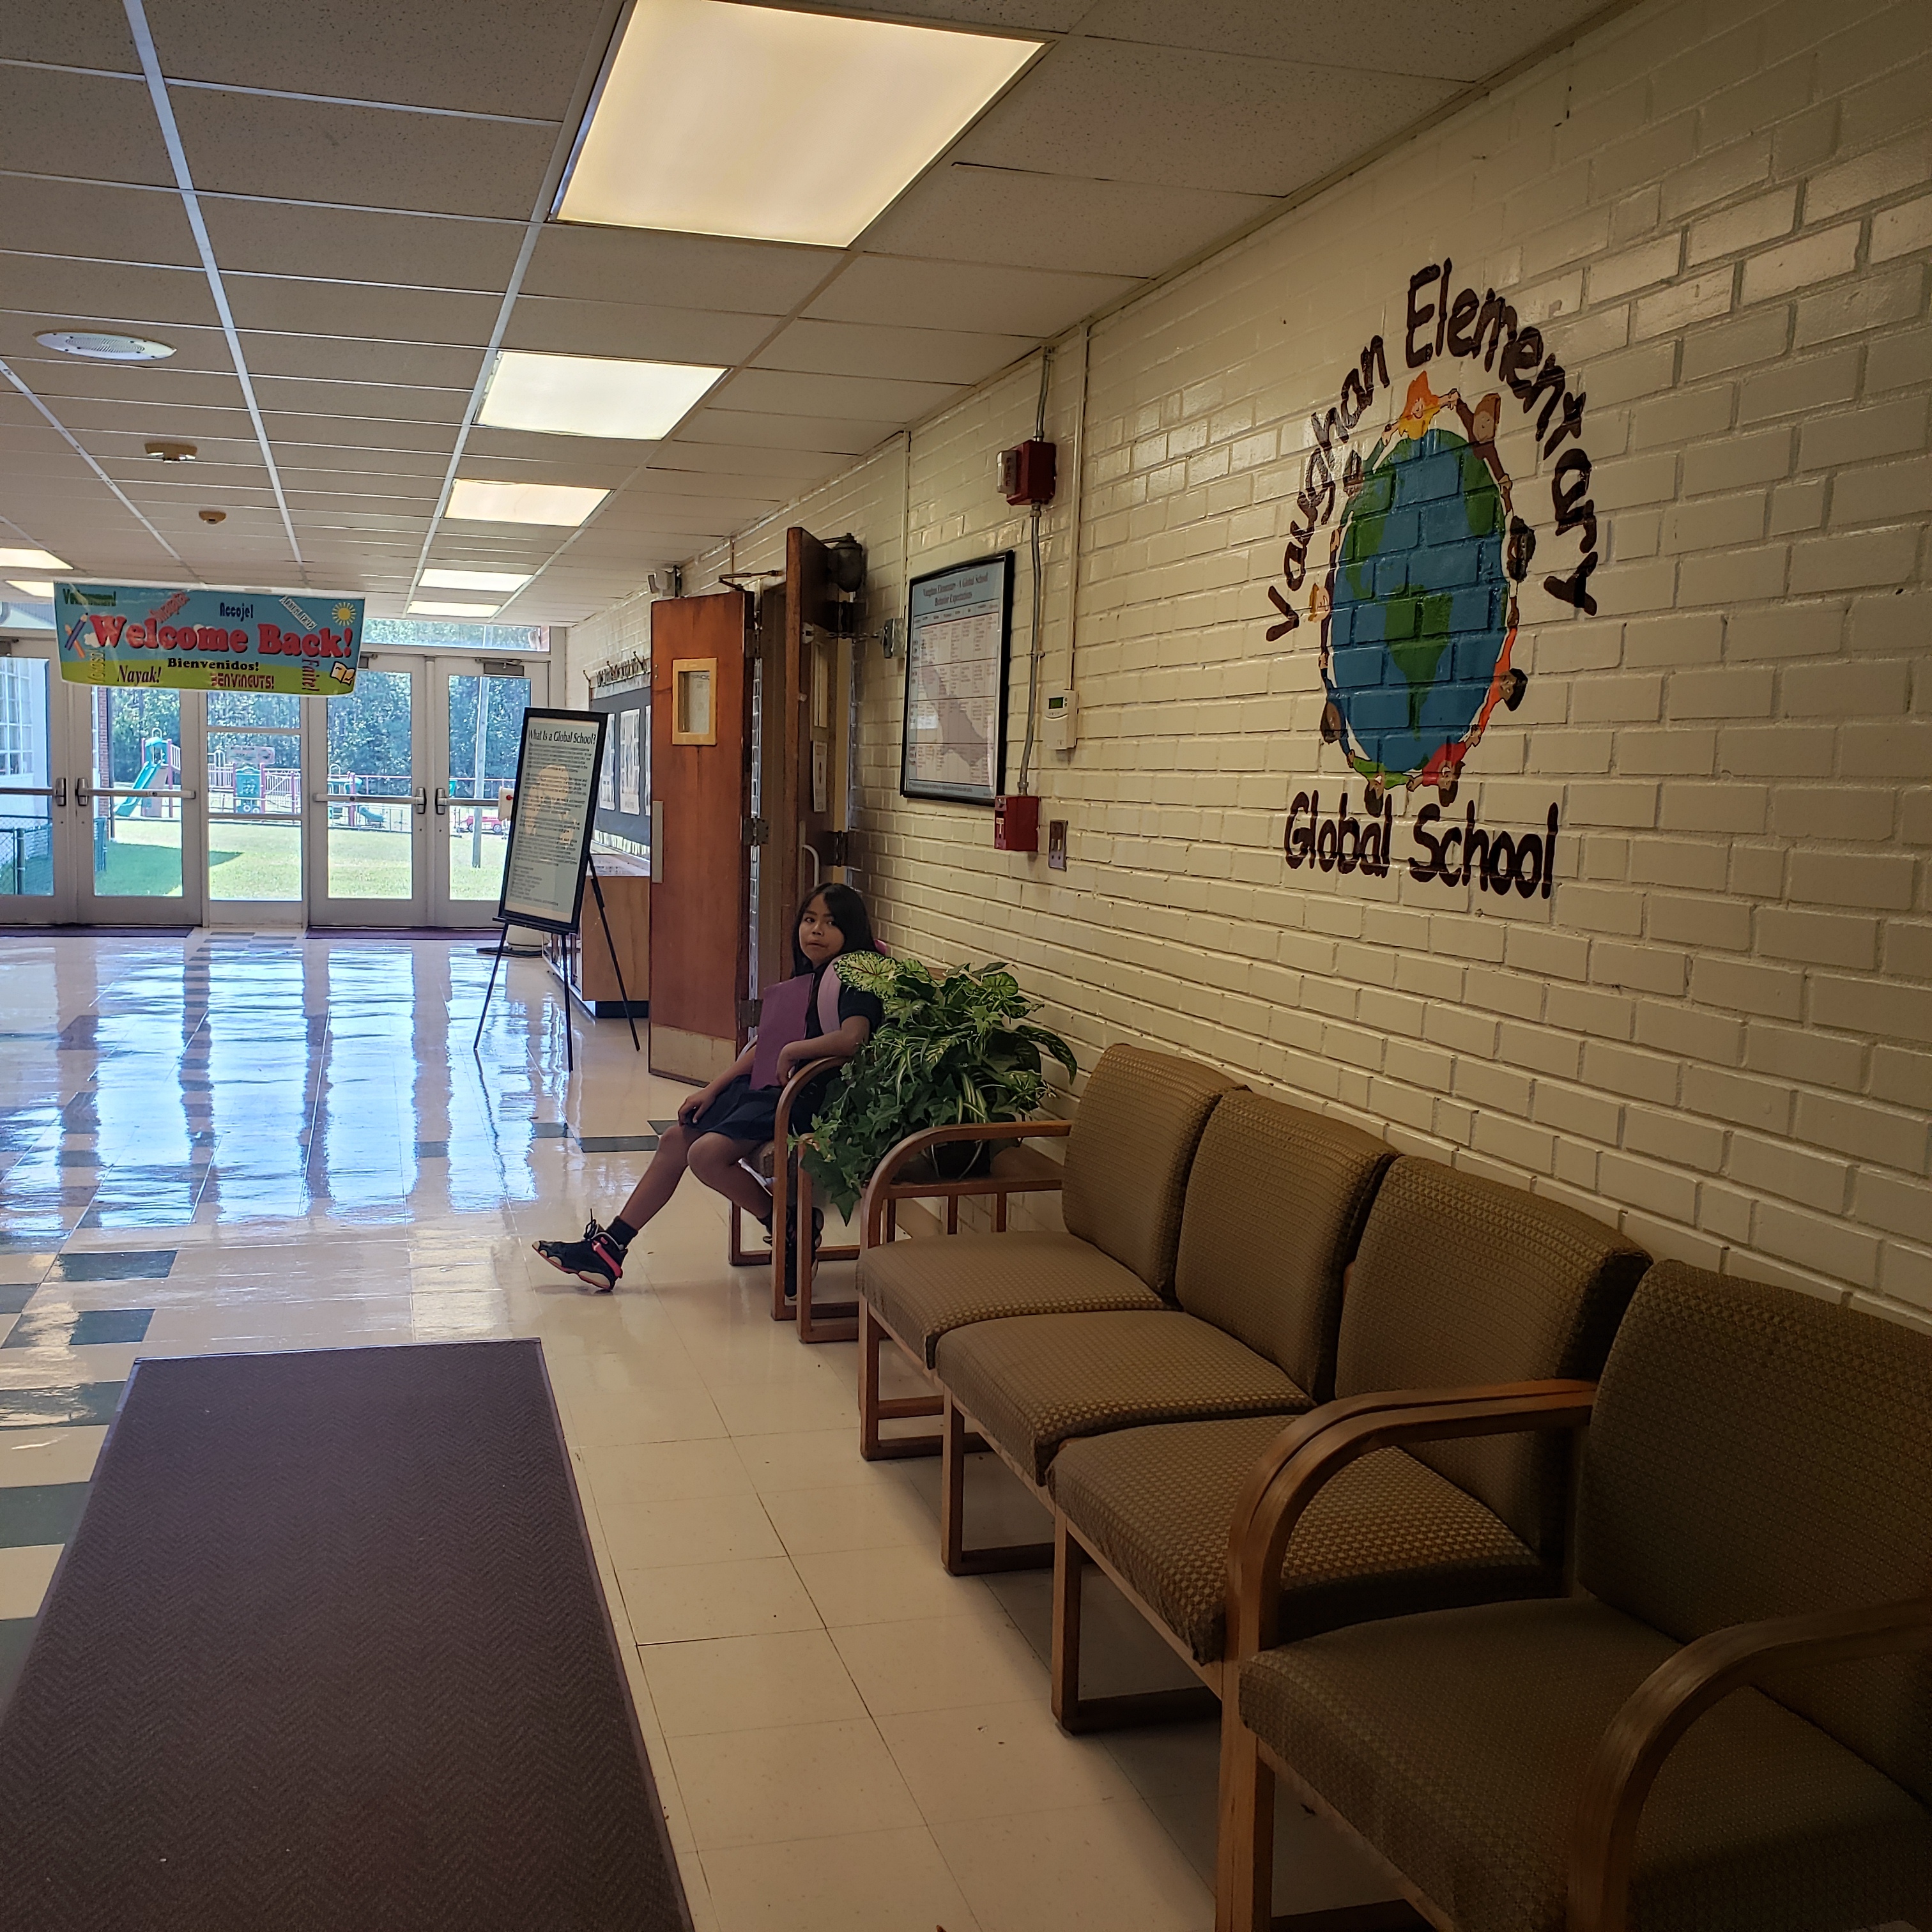 The lobby of Vaughan Elementary School